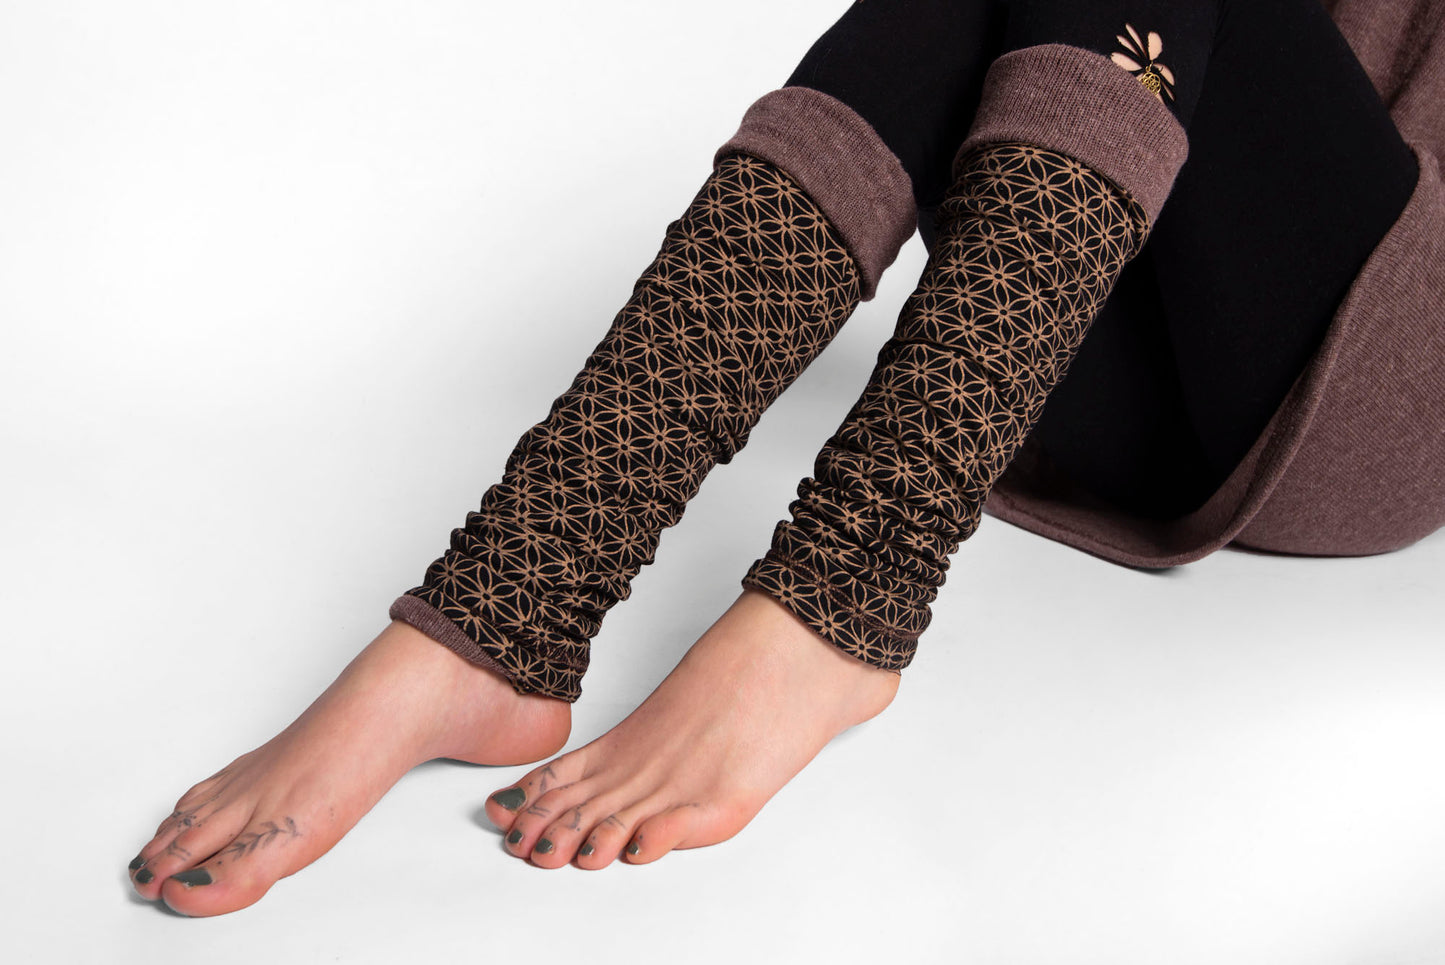 Leg warmers for turning in brown, cuffs, yoga cuffs